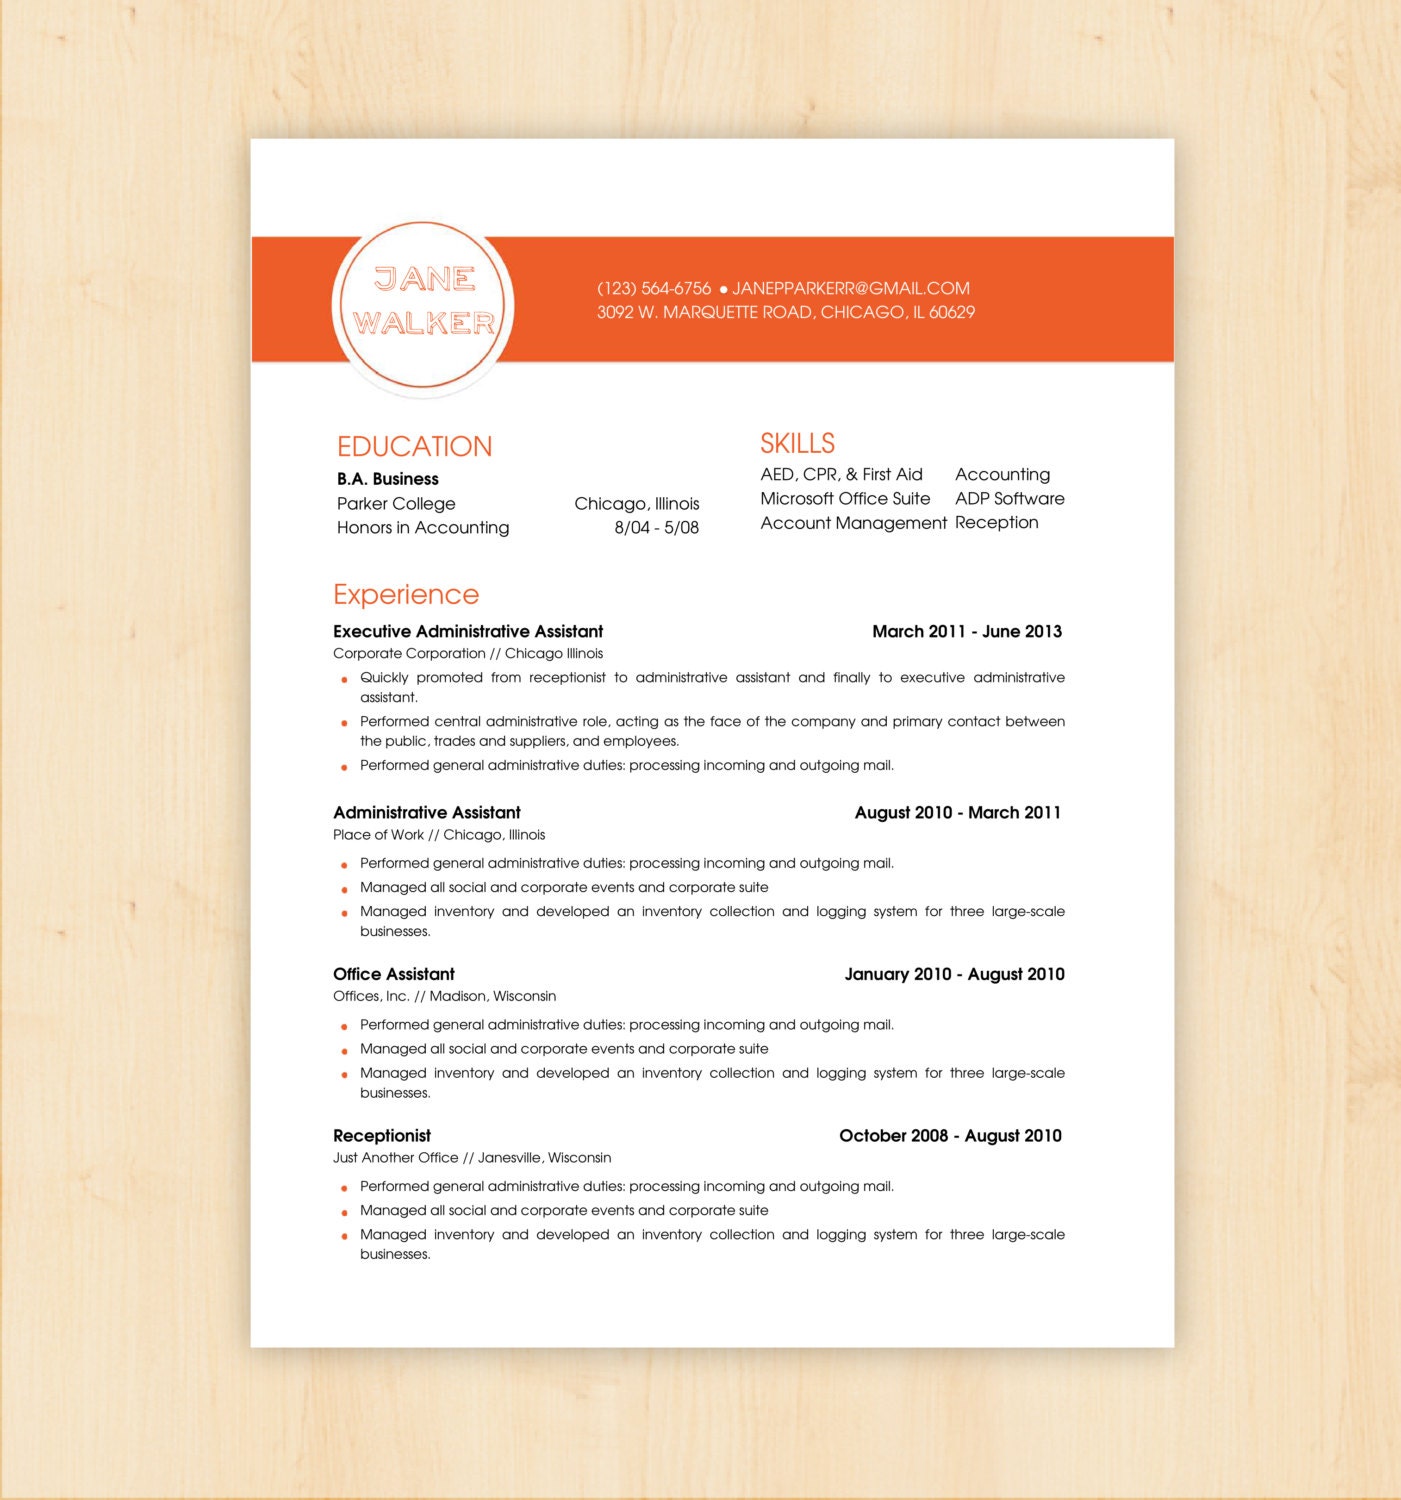 resume template cv template the jane walker resume by